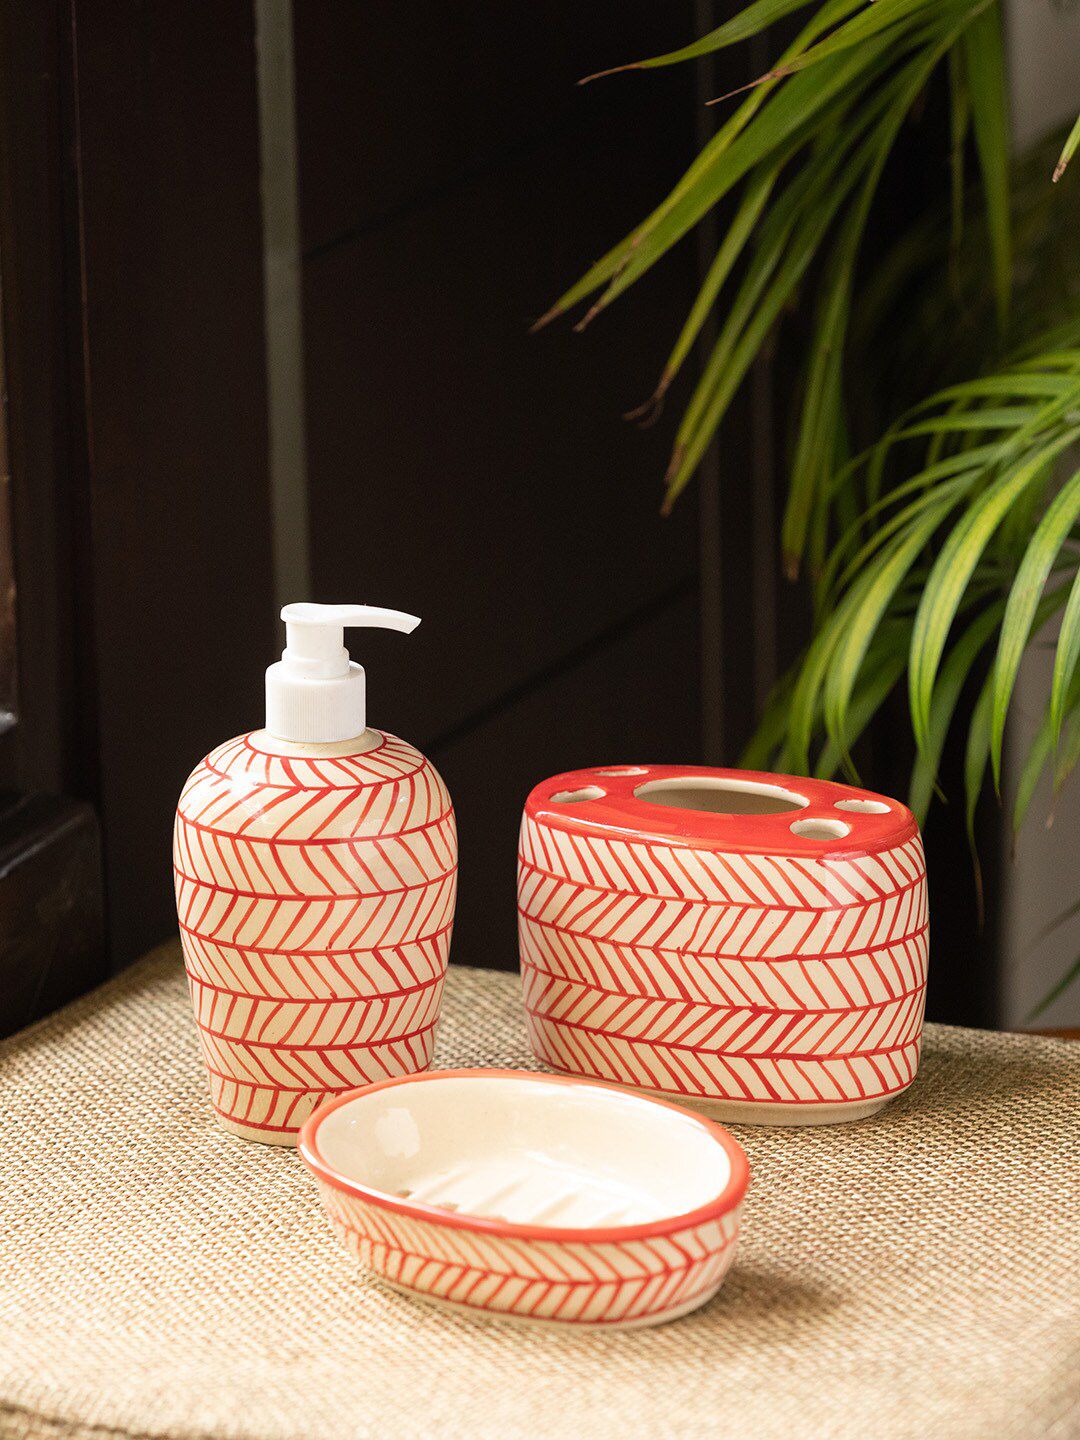 ExclusiveLane Set Of 3 Handpainted Red & White Ceramic Bathroom Accessory Set Price in India